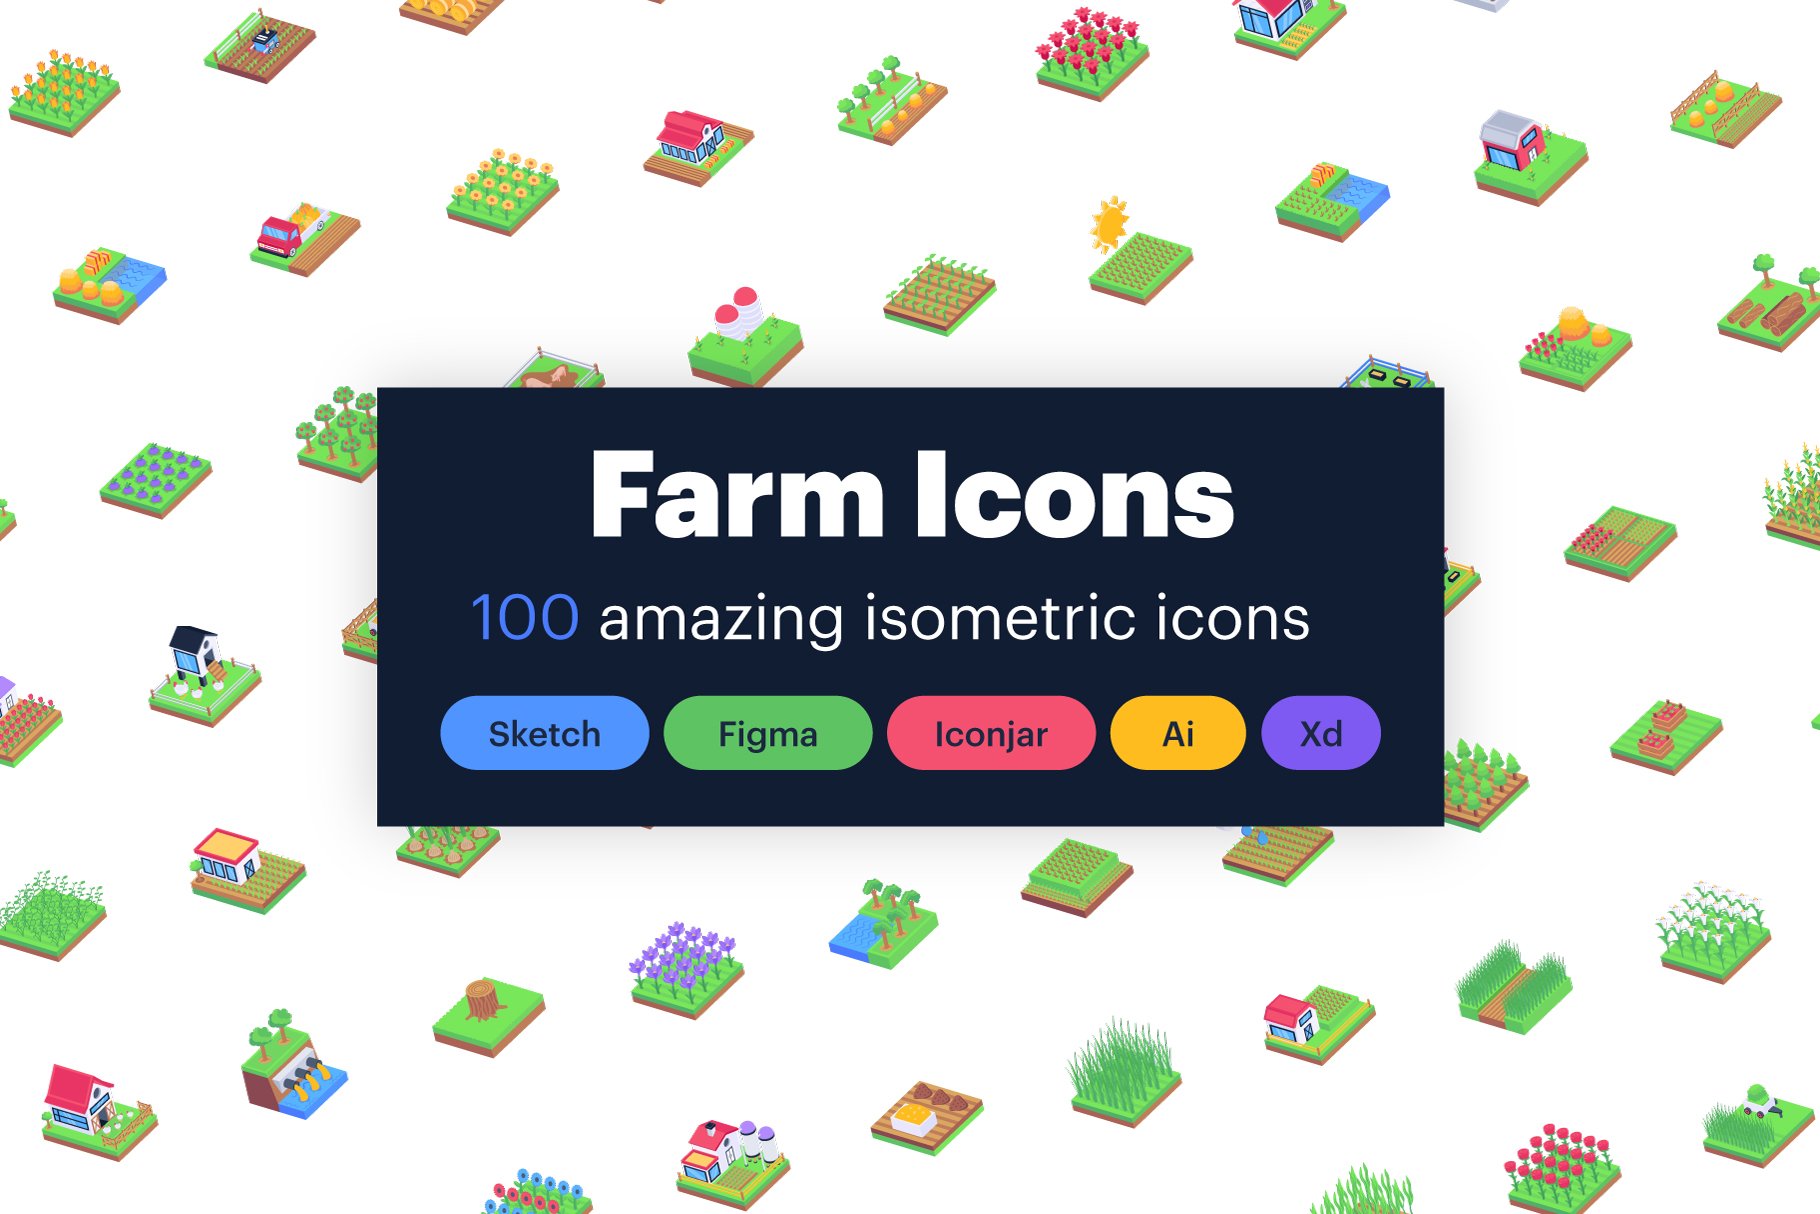 100 Isometric Farm Icons cover image.